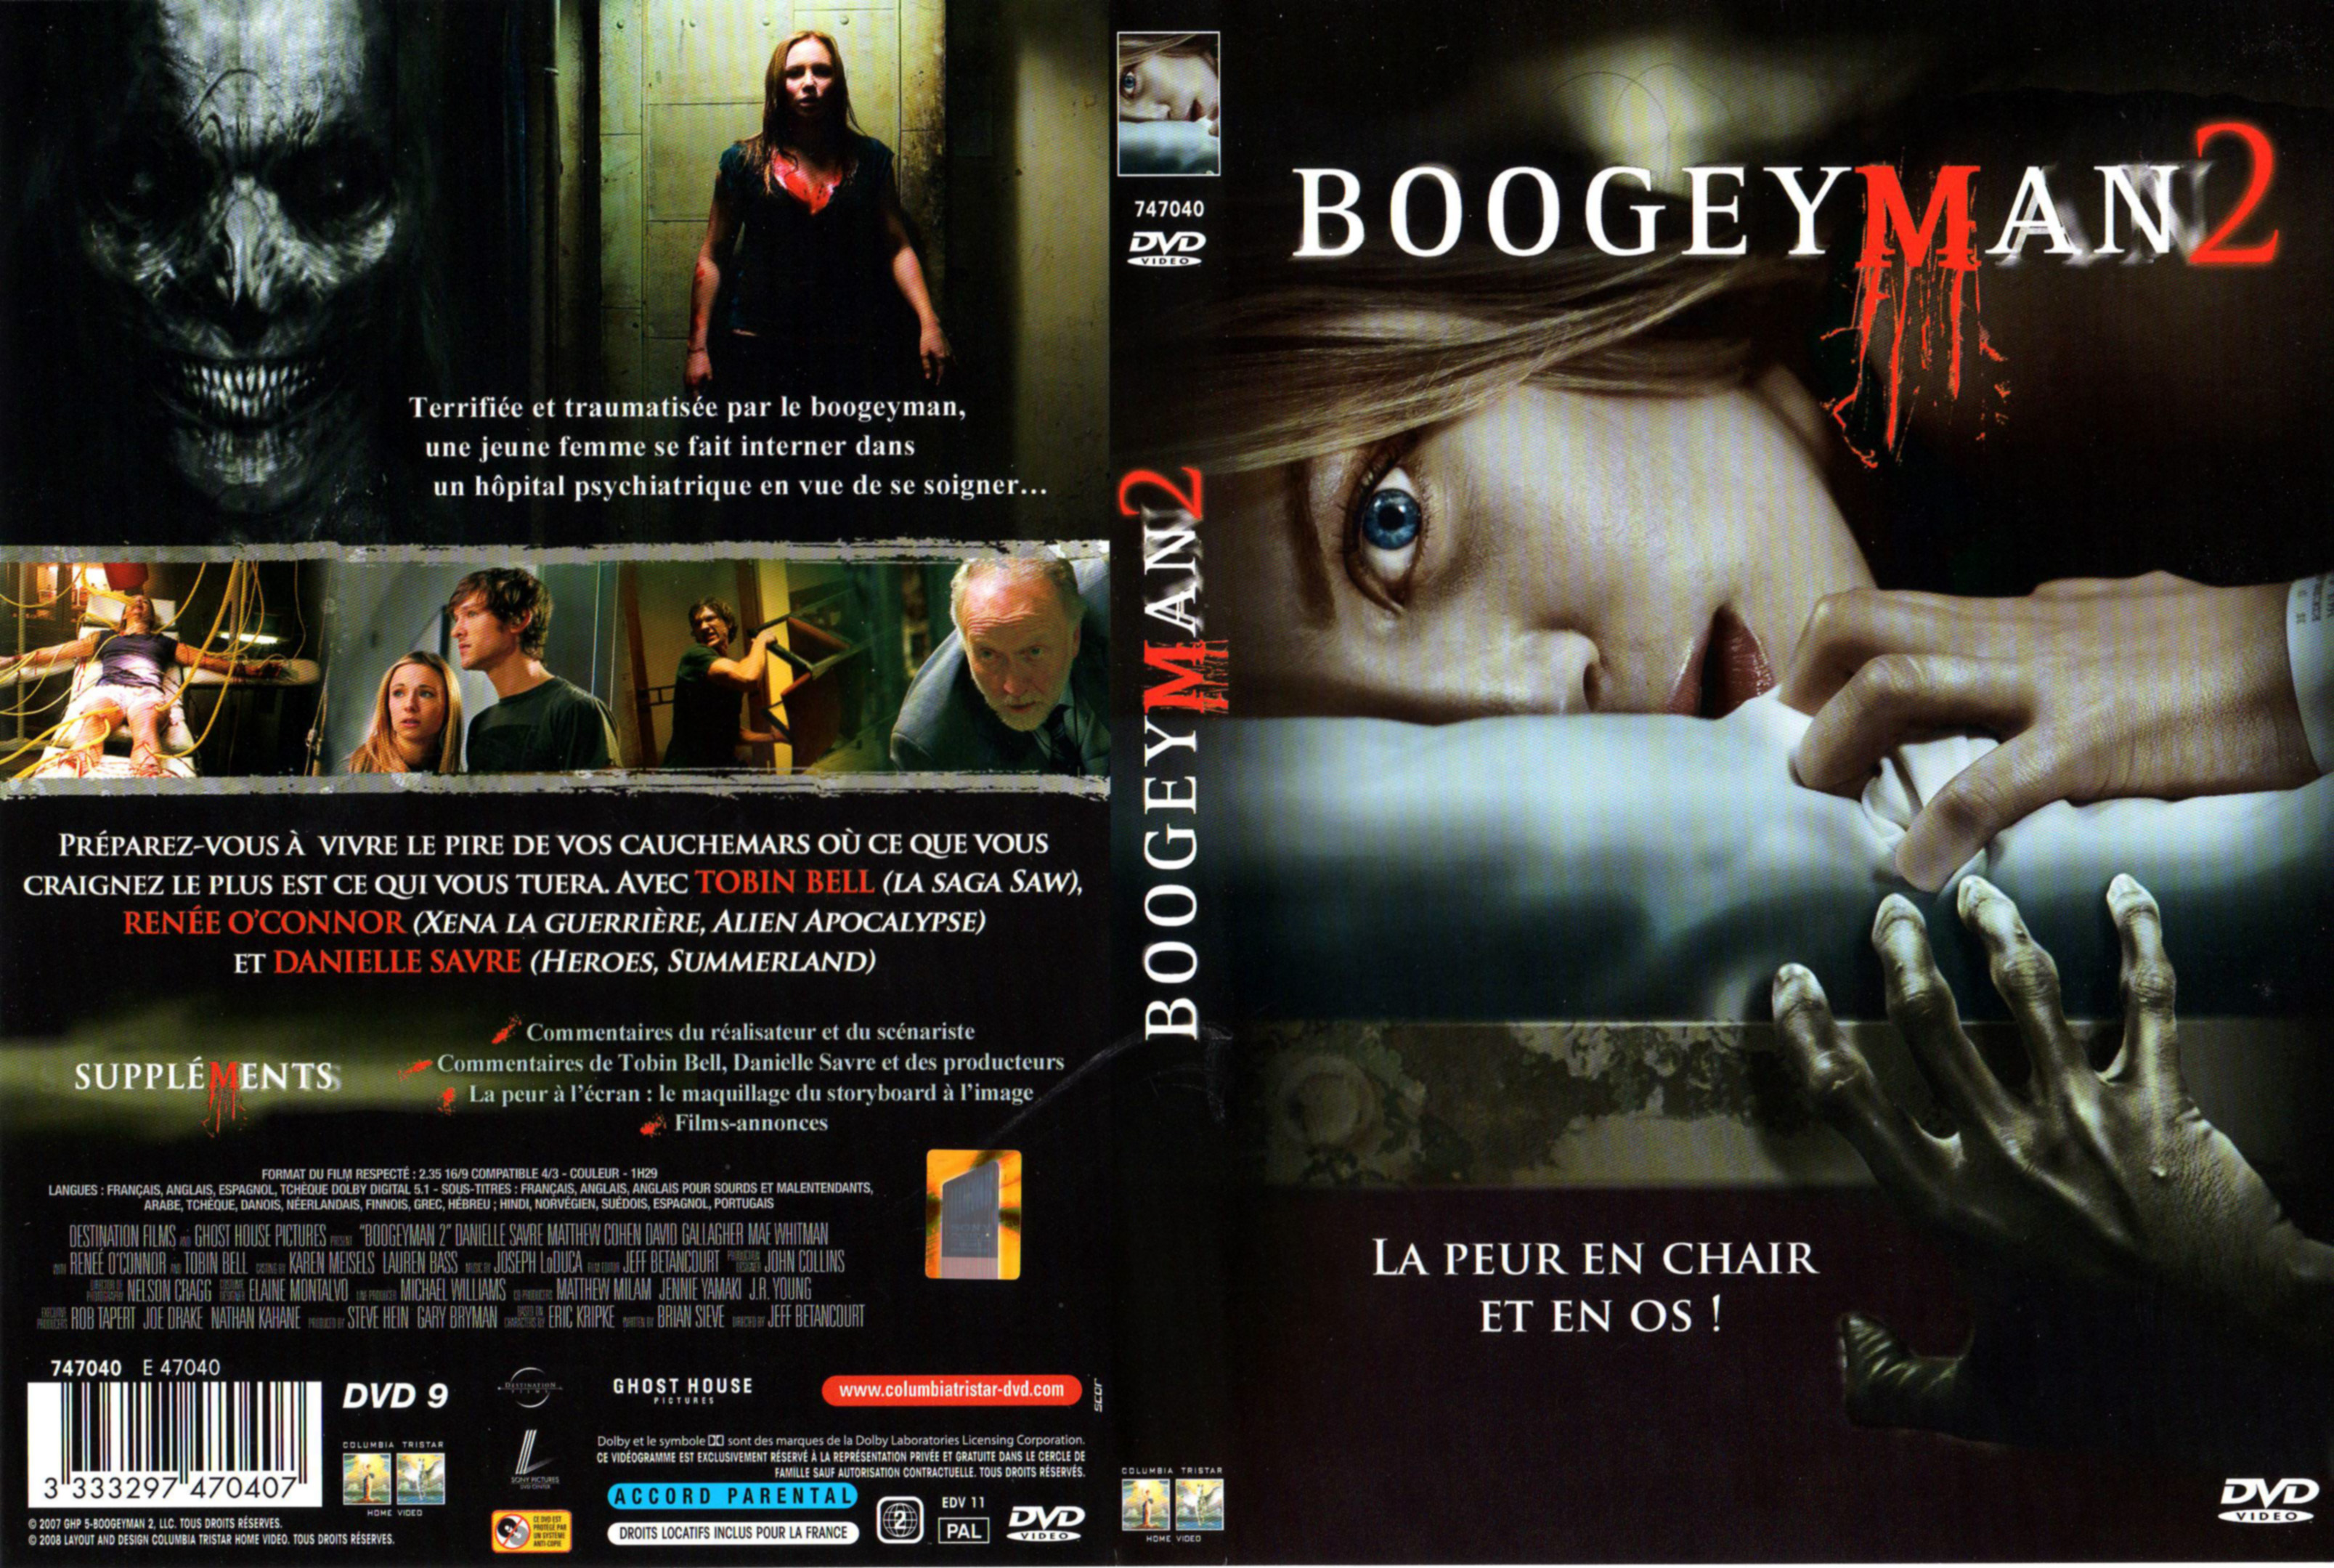 Jaquette DVD Boogeyman 2